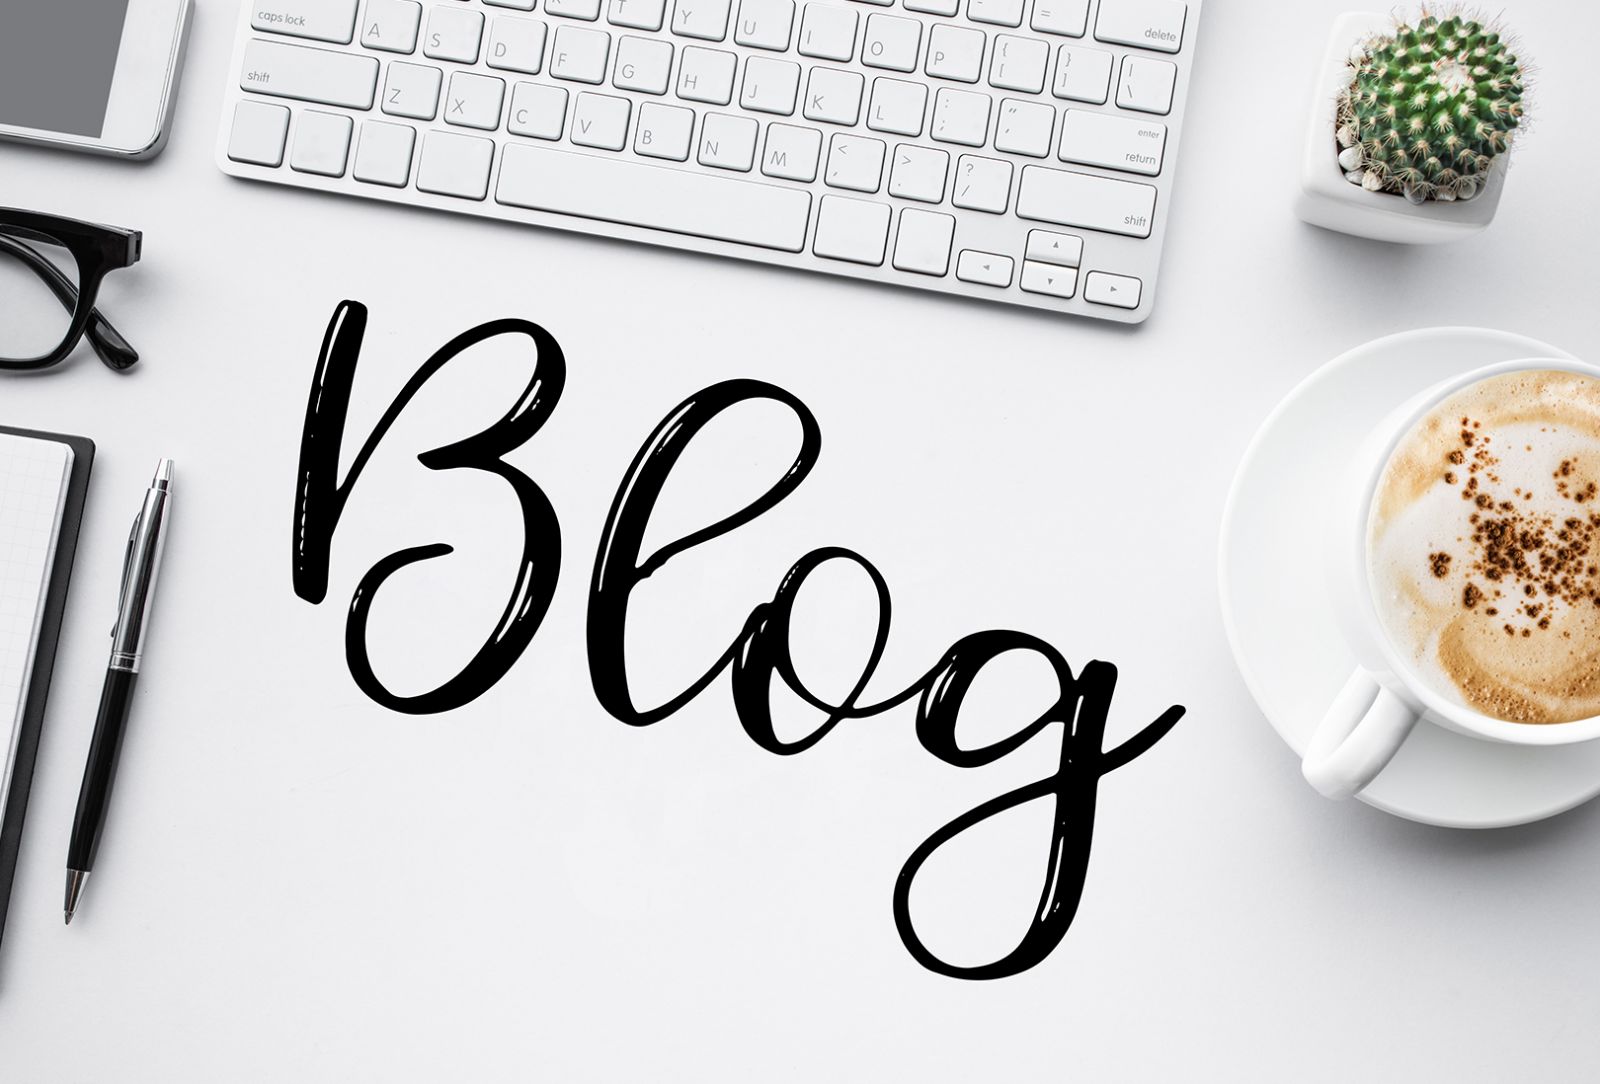 Blogging Creates an Ecosystem